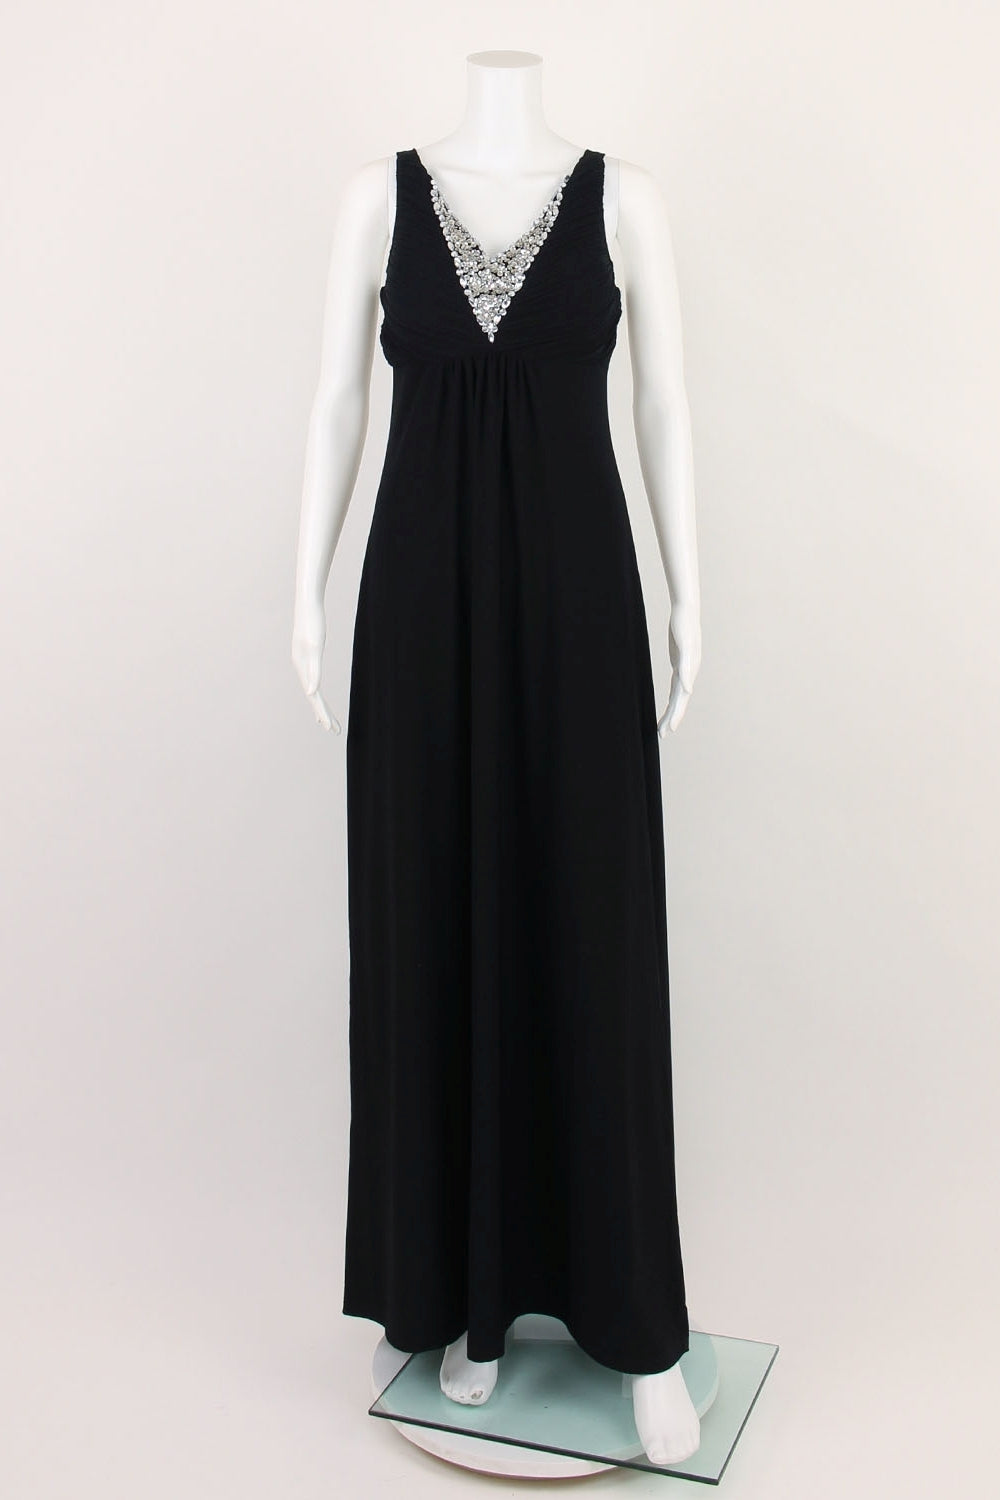 Caroline Morgan Black Embellished Maxi Dress 8